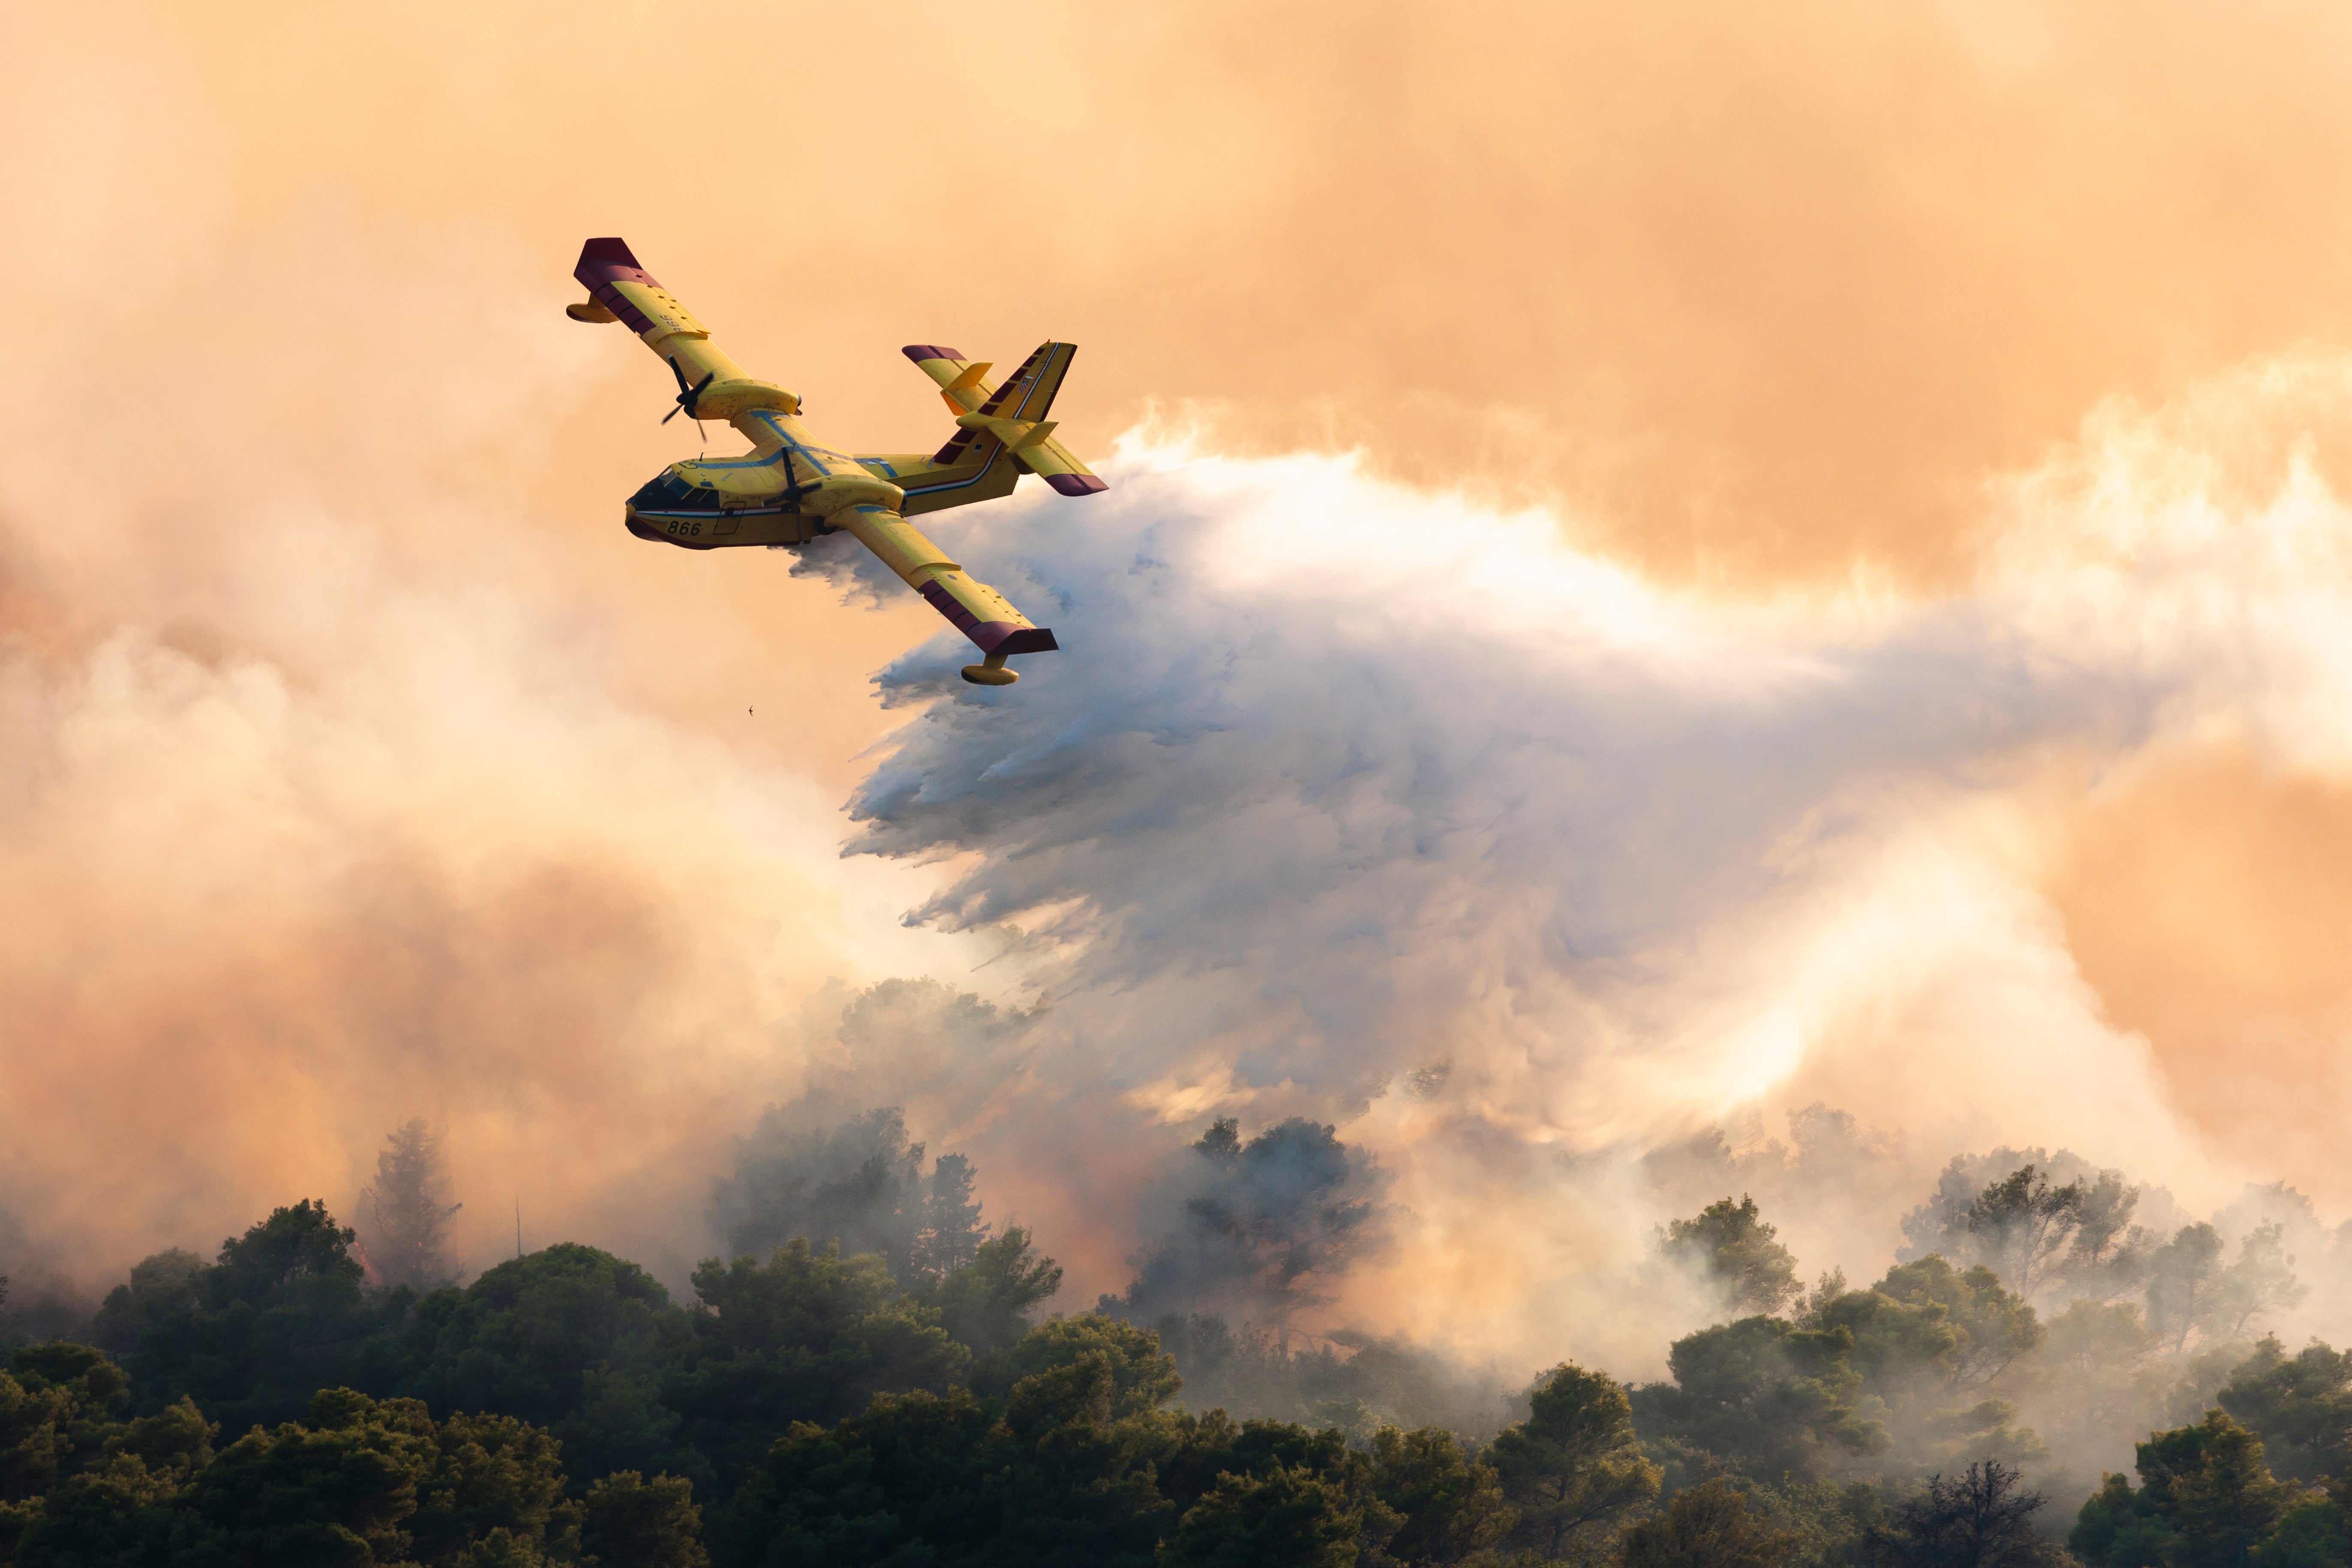 A firefighting plane sprays water to extinguish wildfire at Ciovo island, Croatia